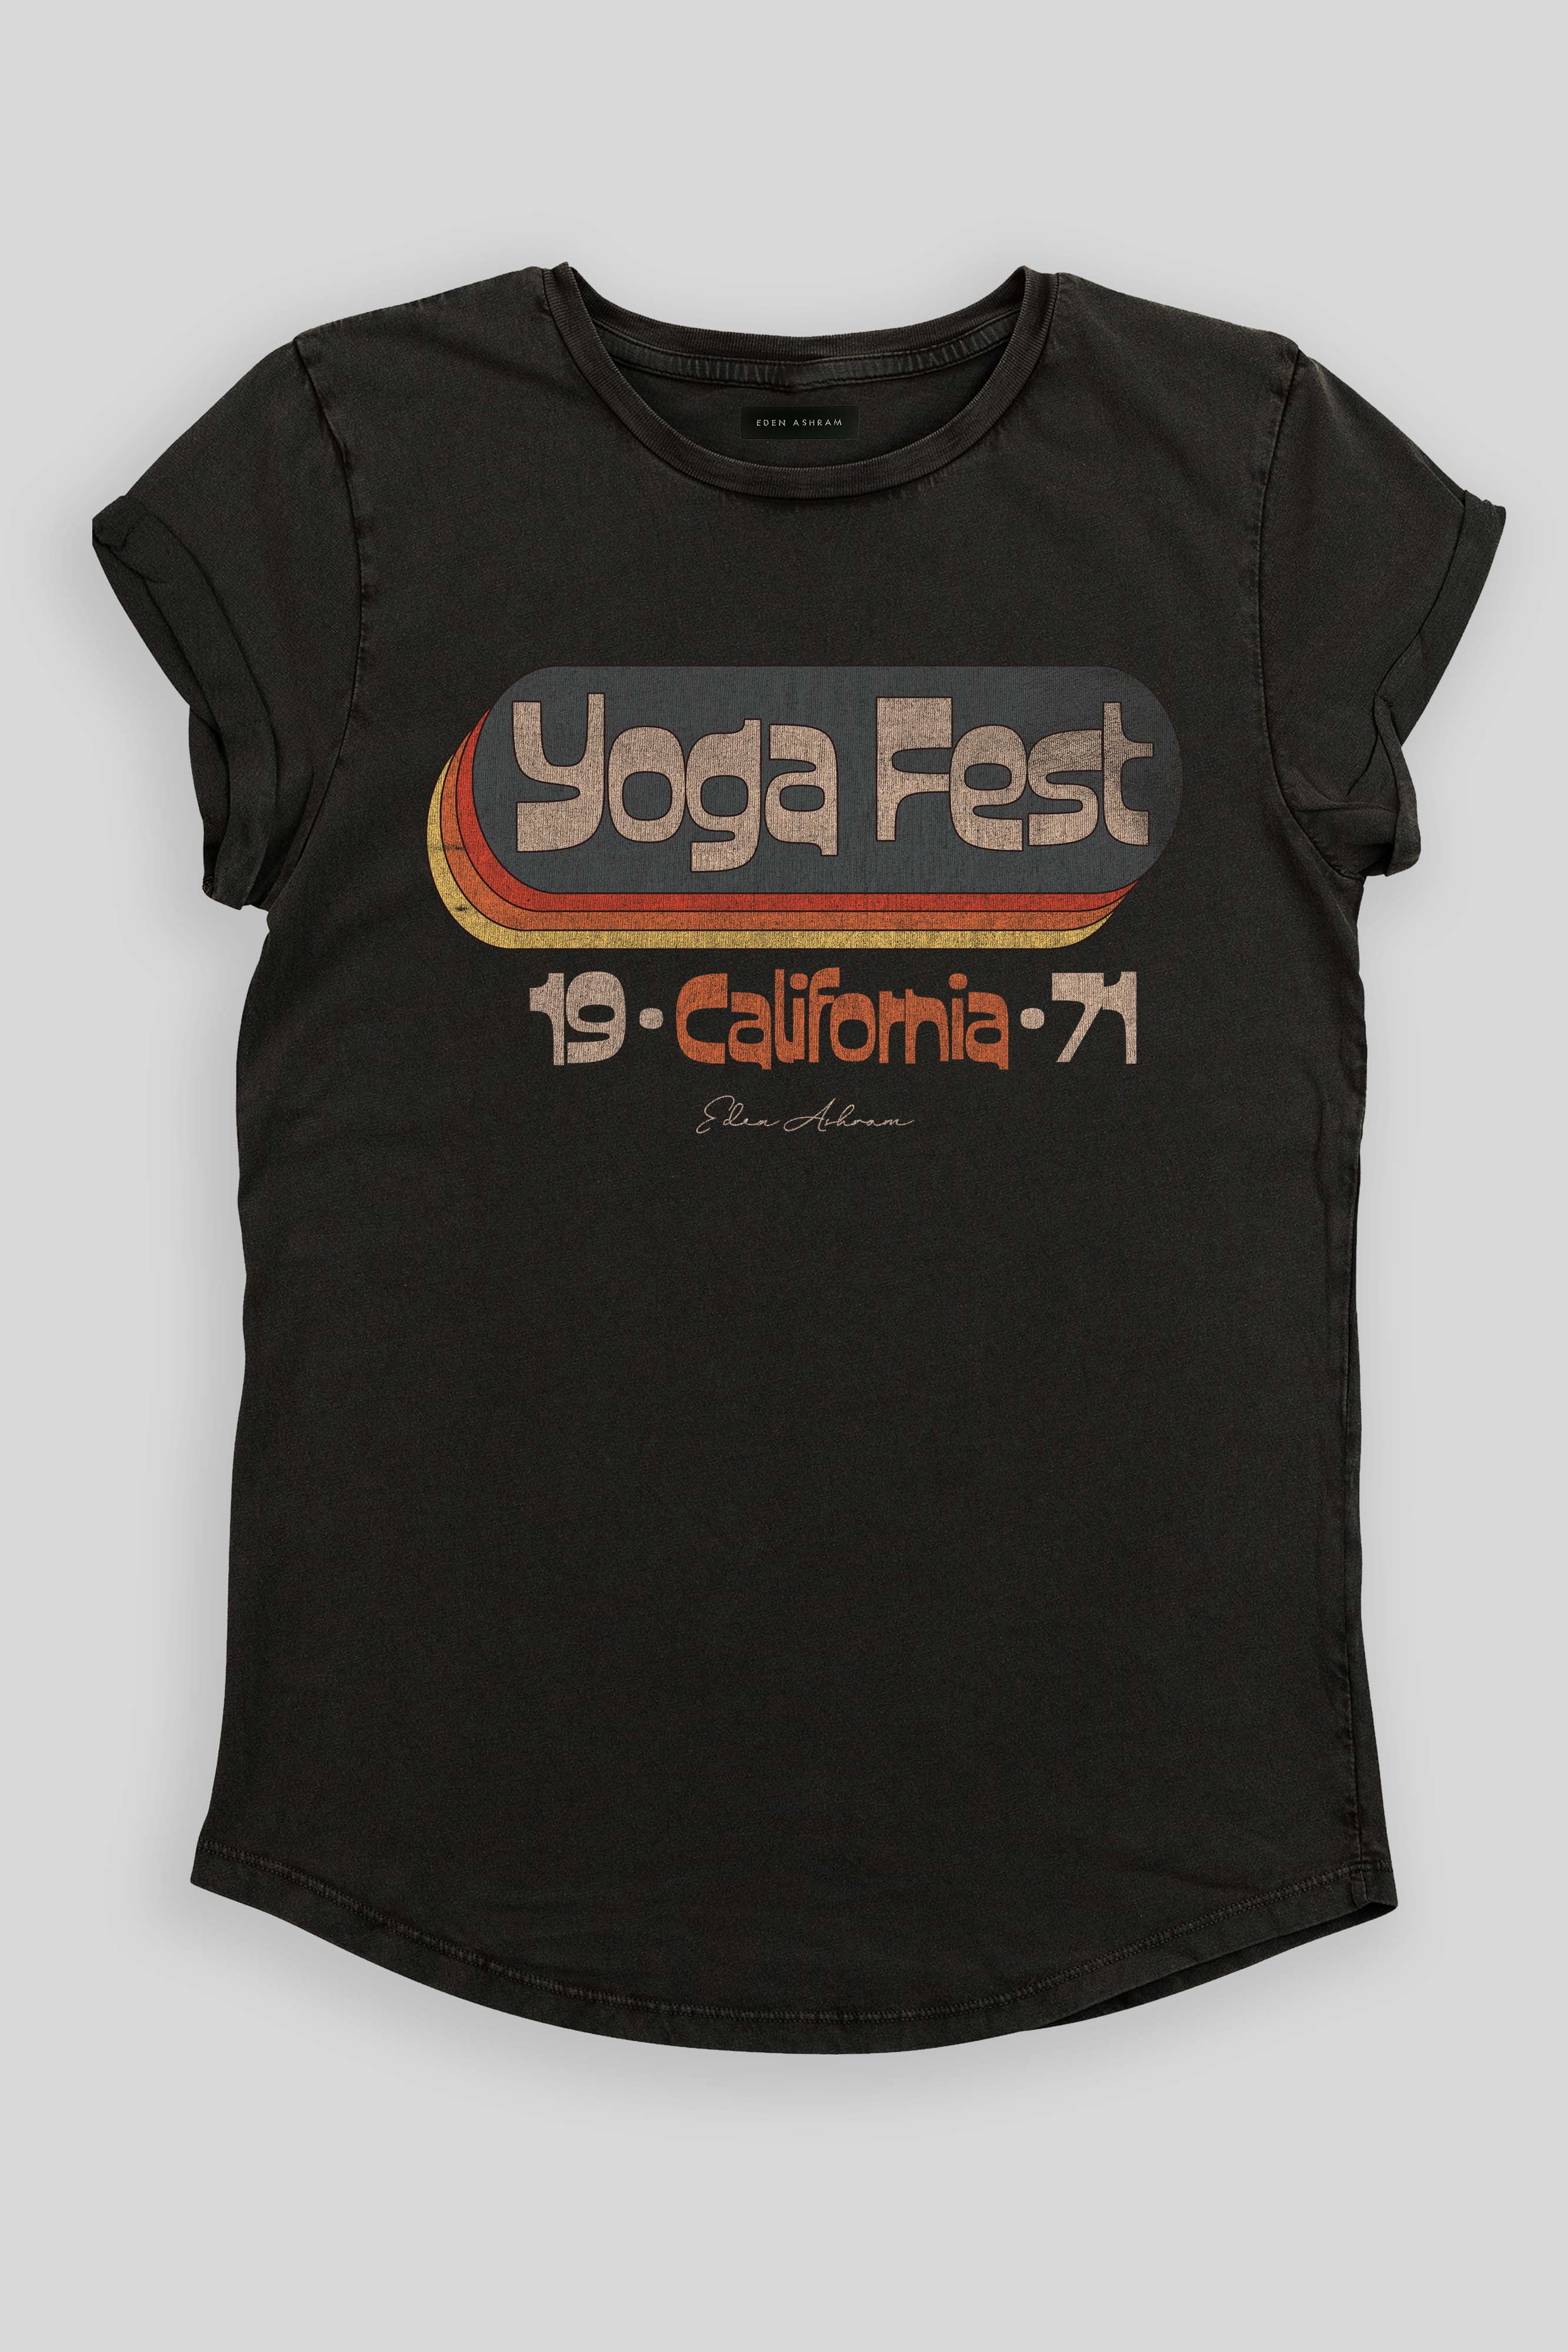 EDEN ASHRAM Yoga Fest Stonewash Rolled Sleeve Tour T-Shirt Stonewash Black